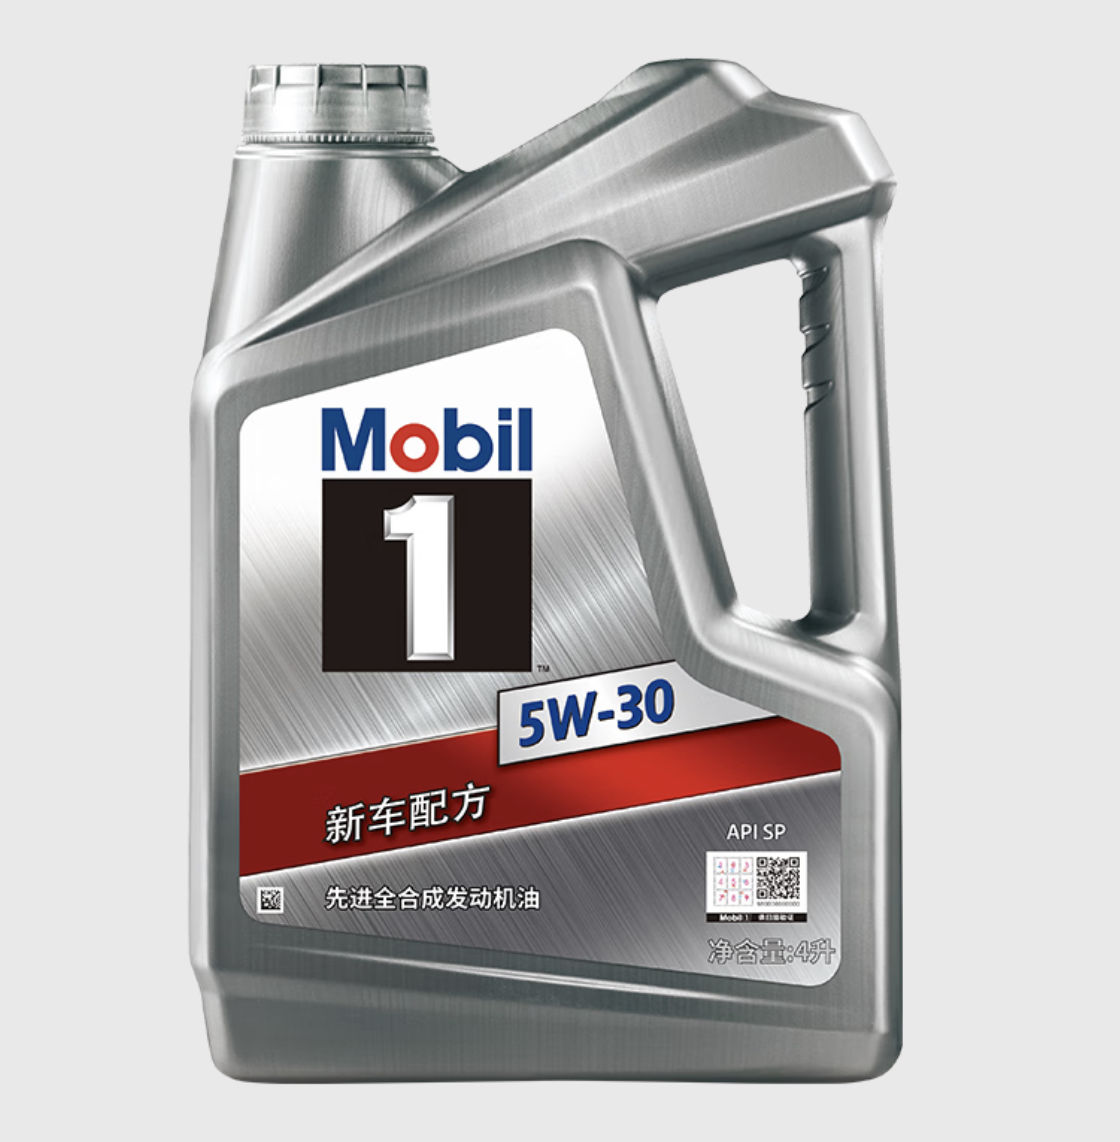 Mobil 美孚 保养单次卡 银美孚1号汽机油5W-30 SP级 4L 含机滤包安装 398元包邮（安装返后198）